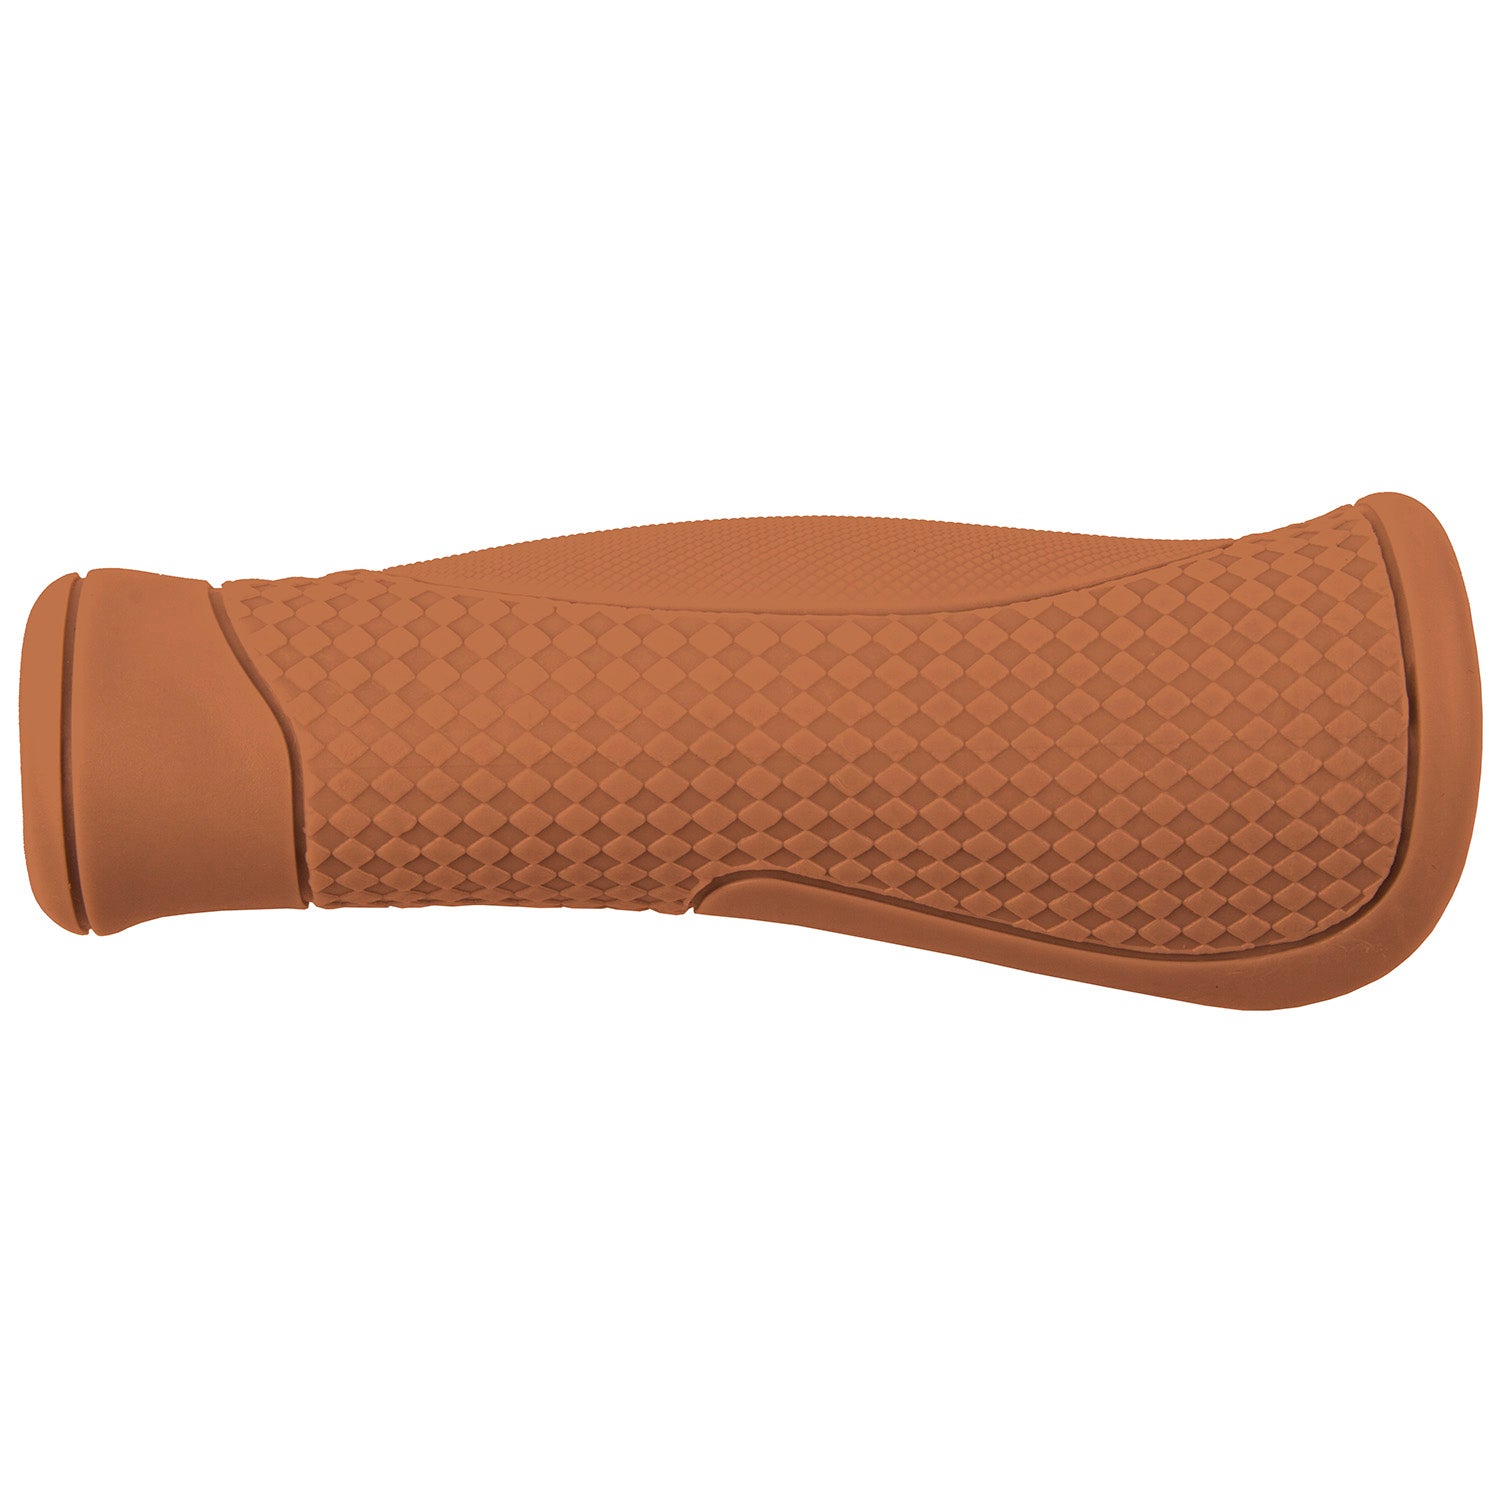 Kgs ergo grip handle set 130 mm brown